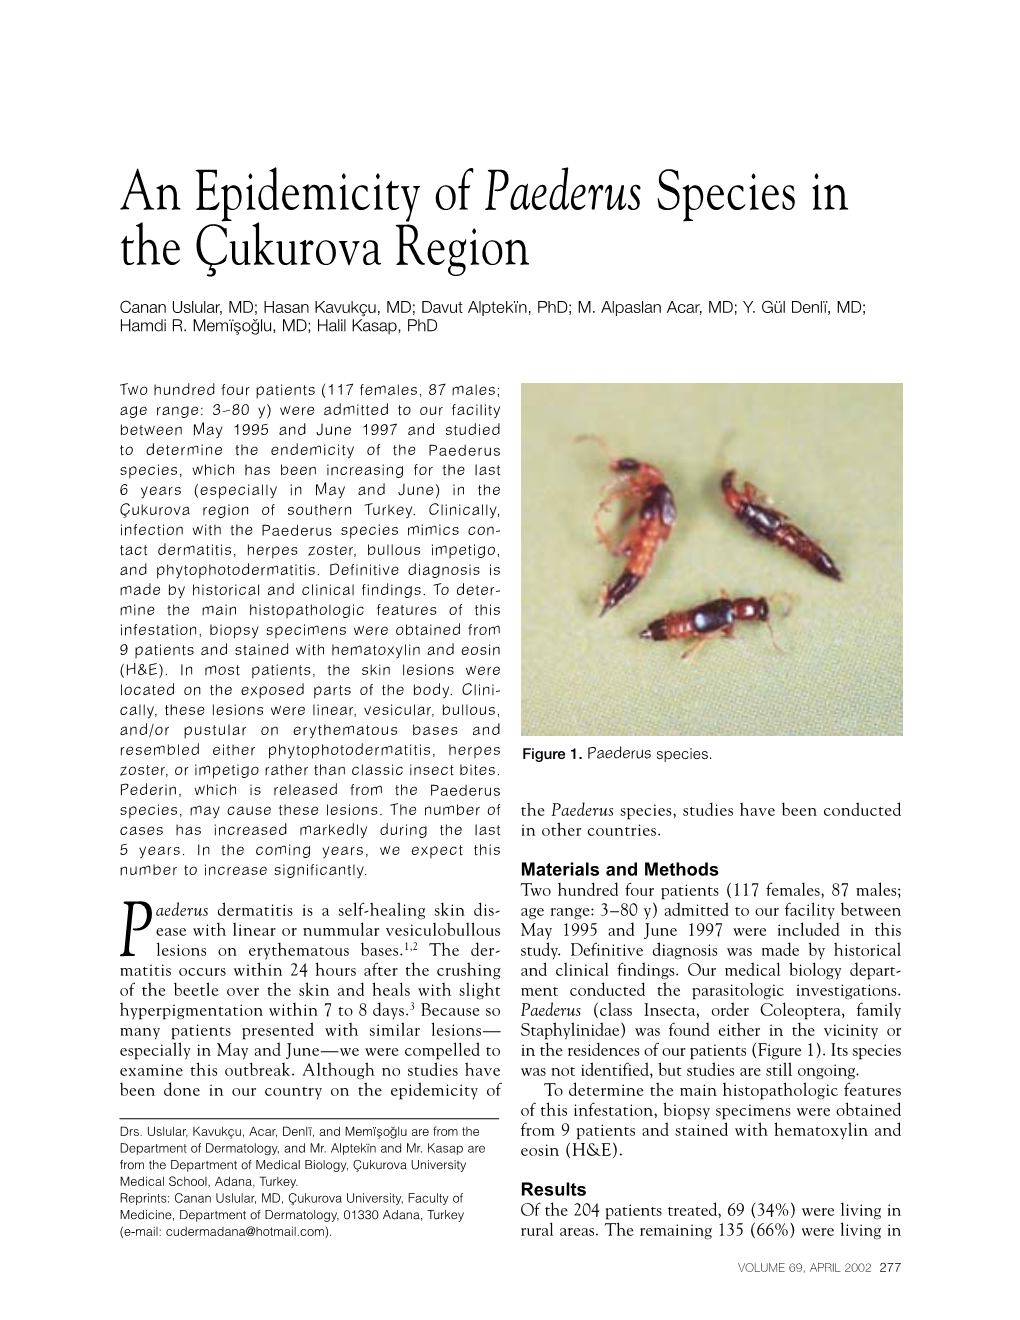 An Epidemicity of Paederus Species in the Çukurova Region